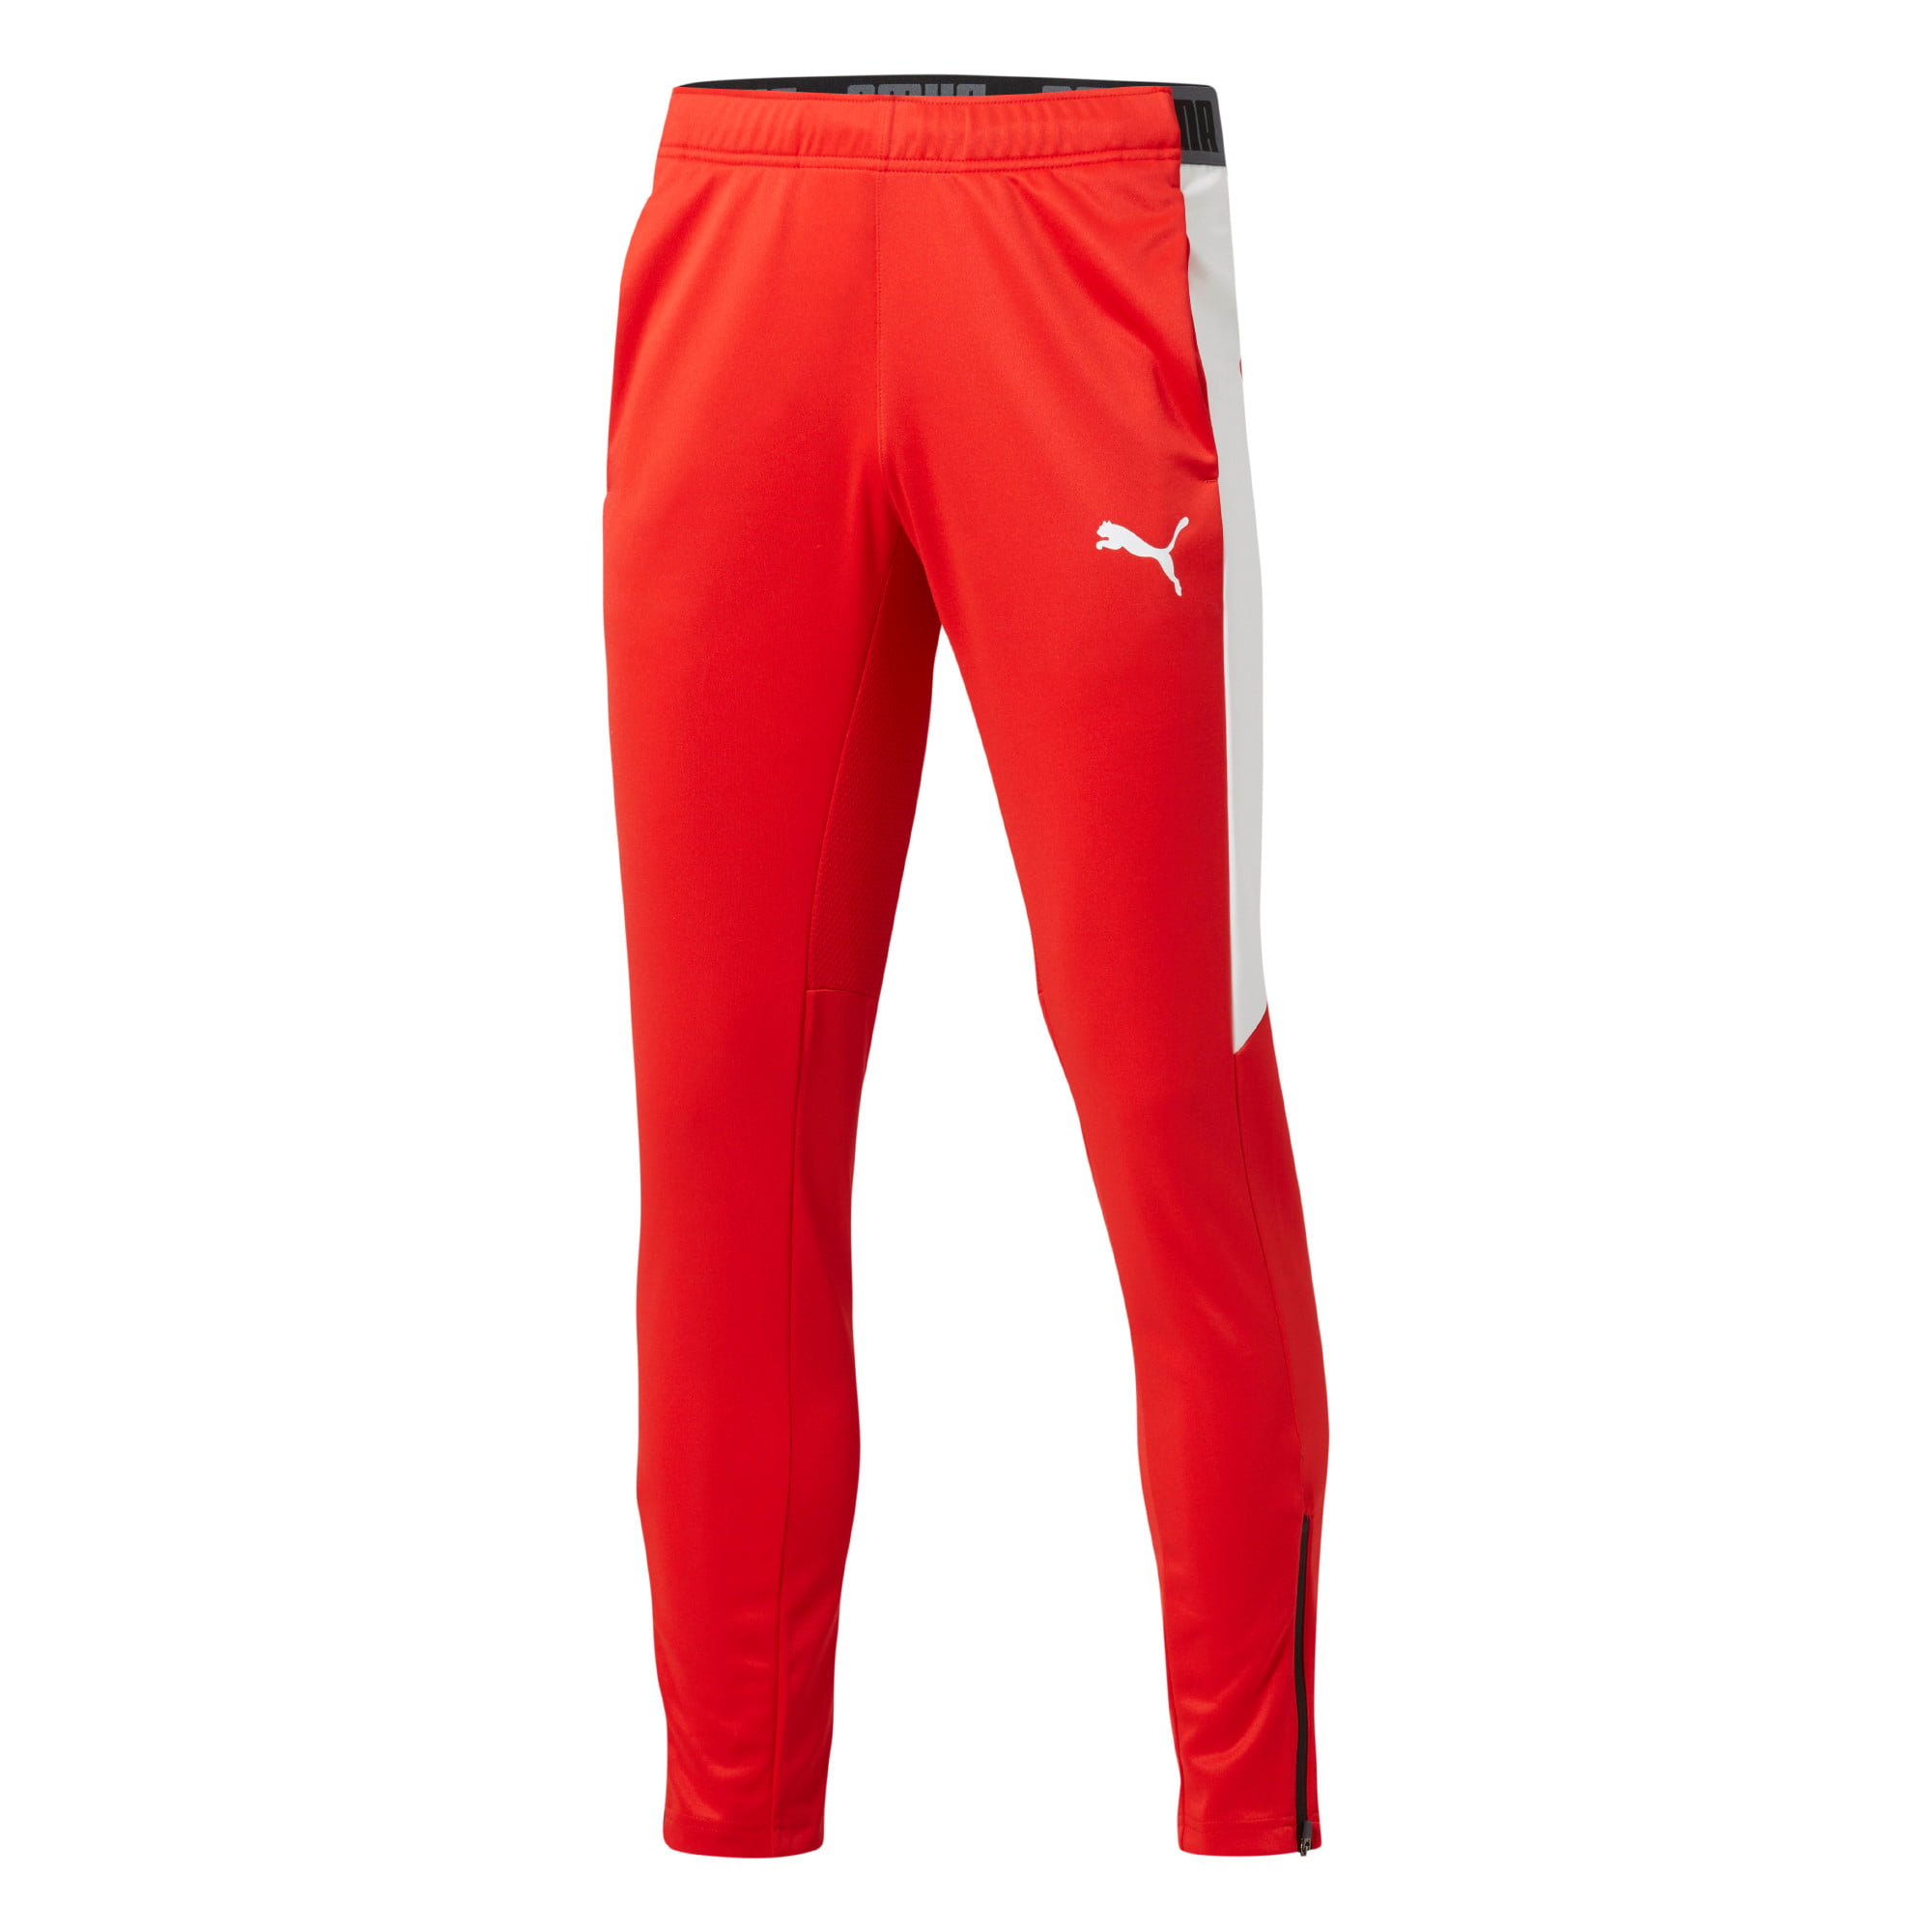 Puma Men's Speed Training Pants Red-White 656299-08 - Walmart.com